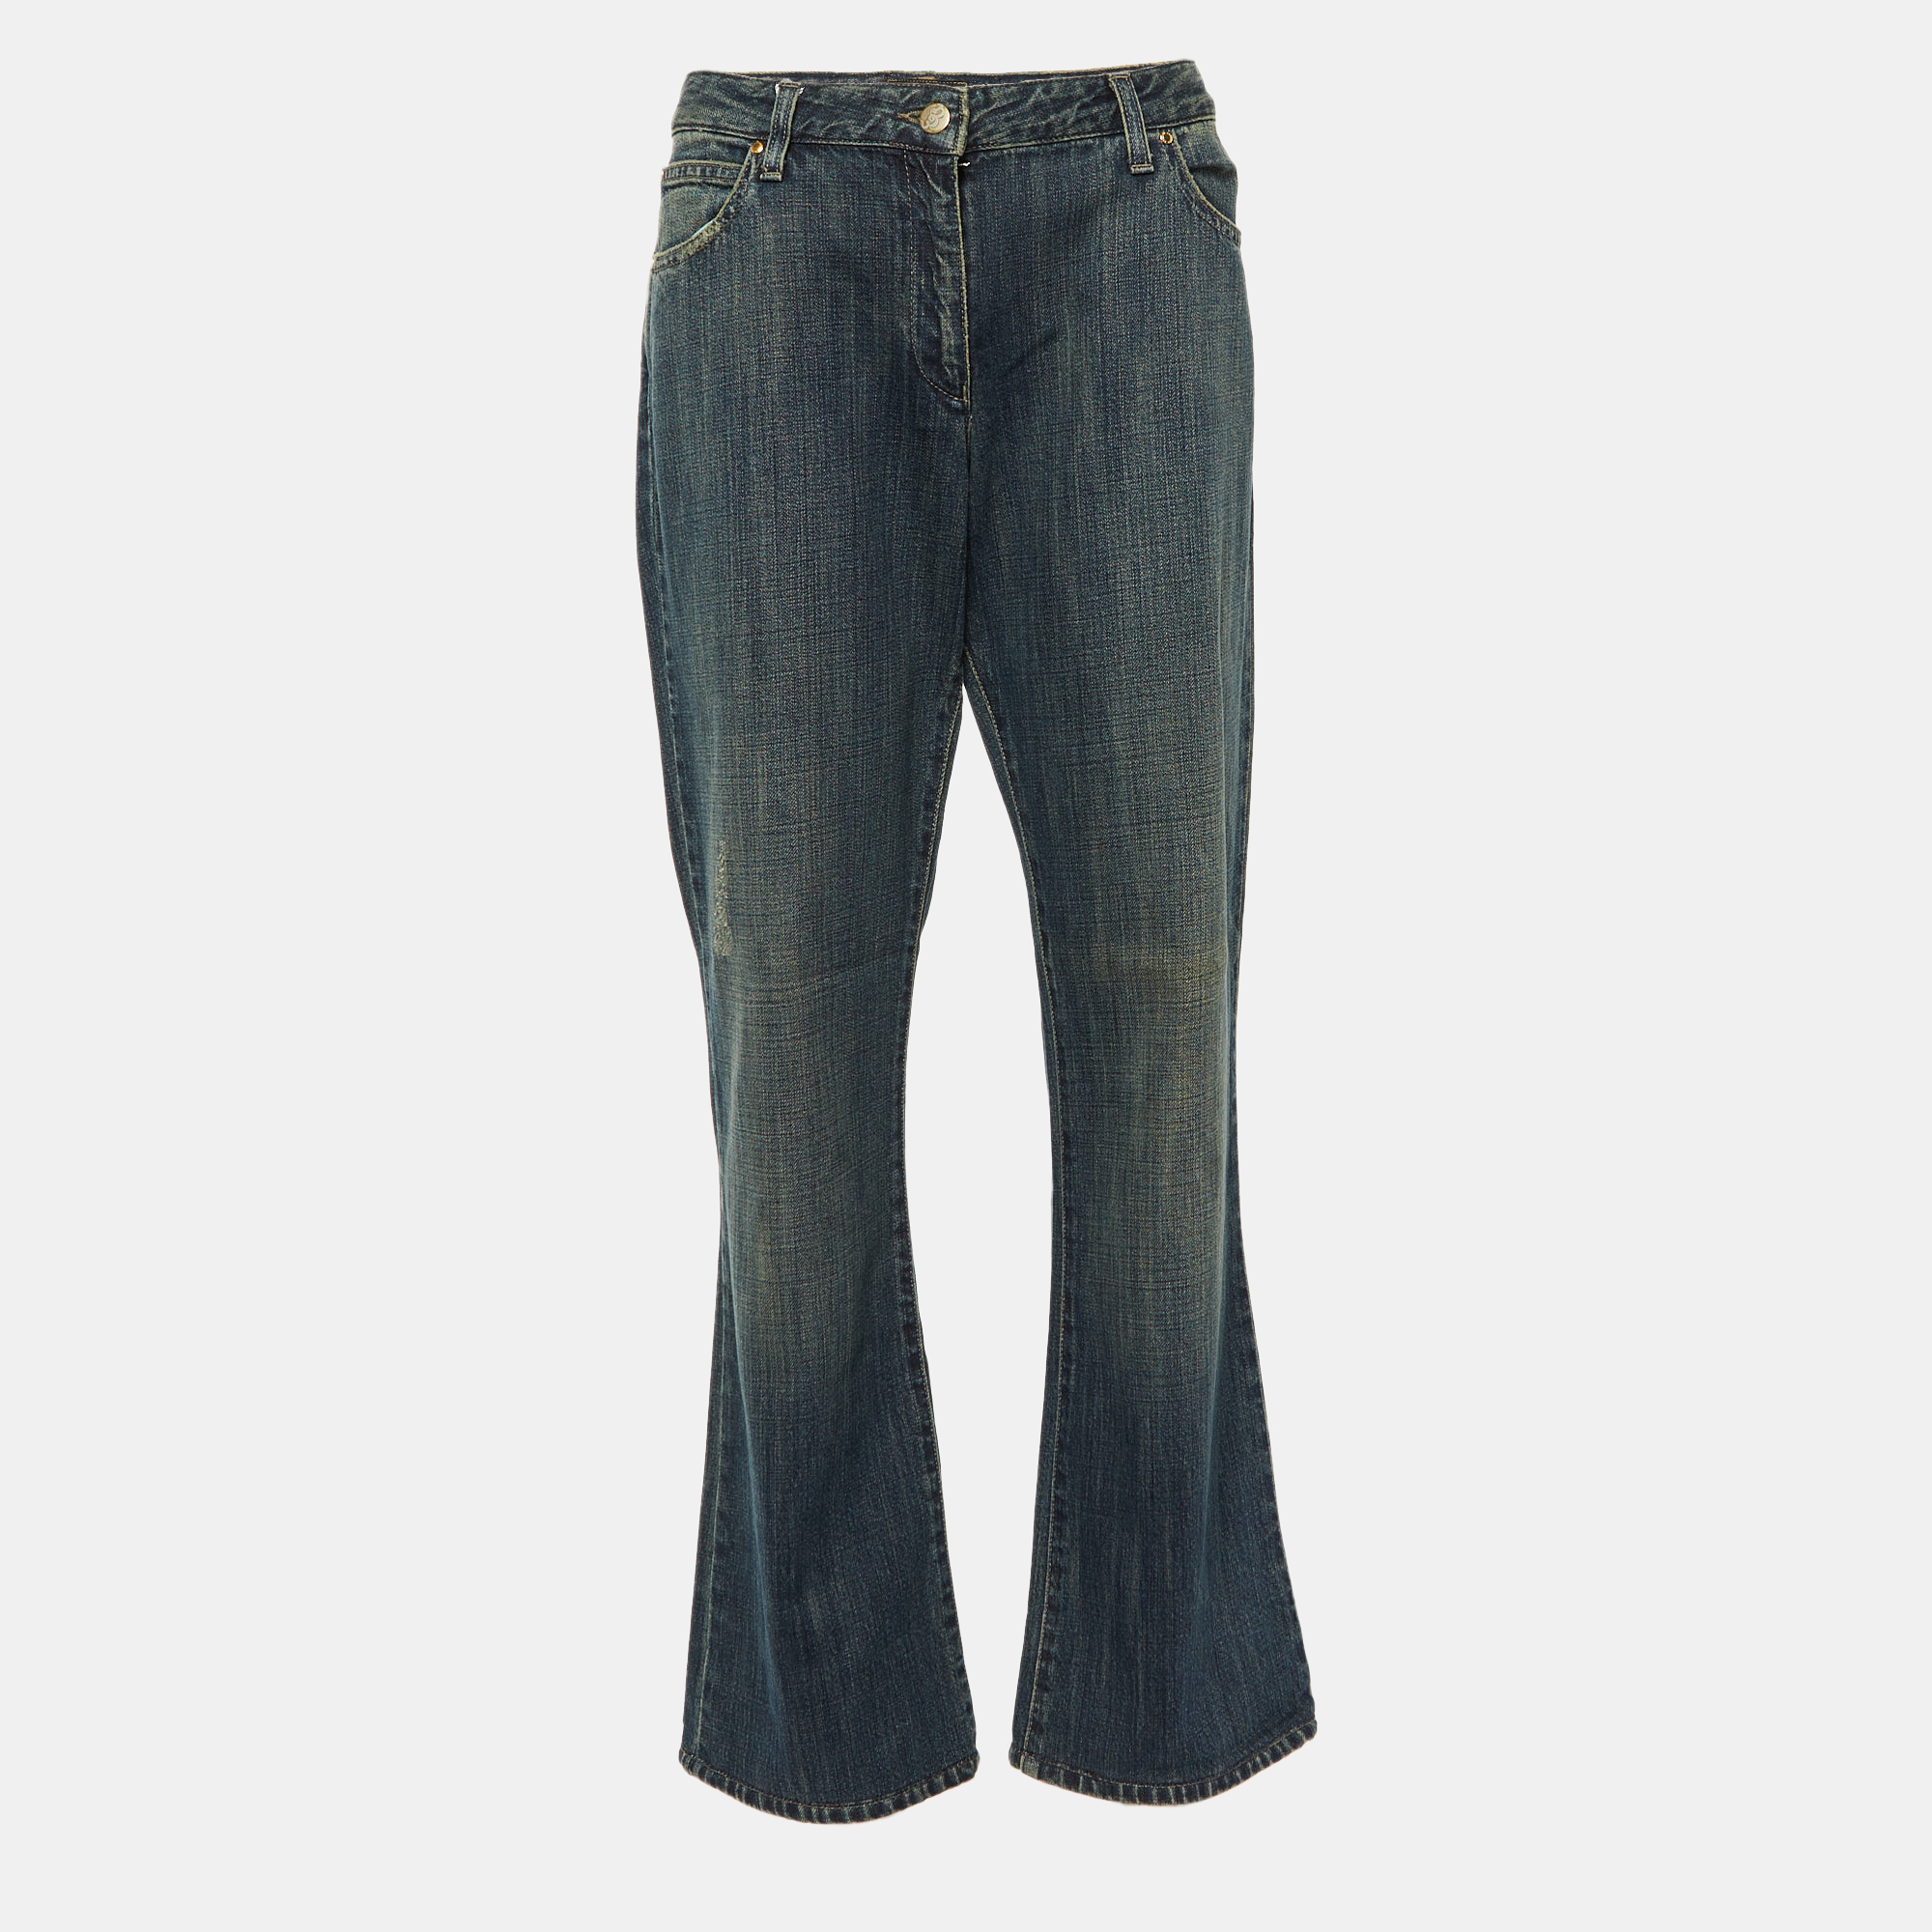 Emporio Armani Blue Washed Denim Jeans L Waist 31